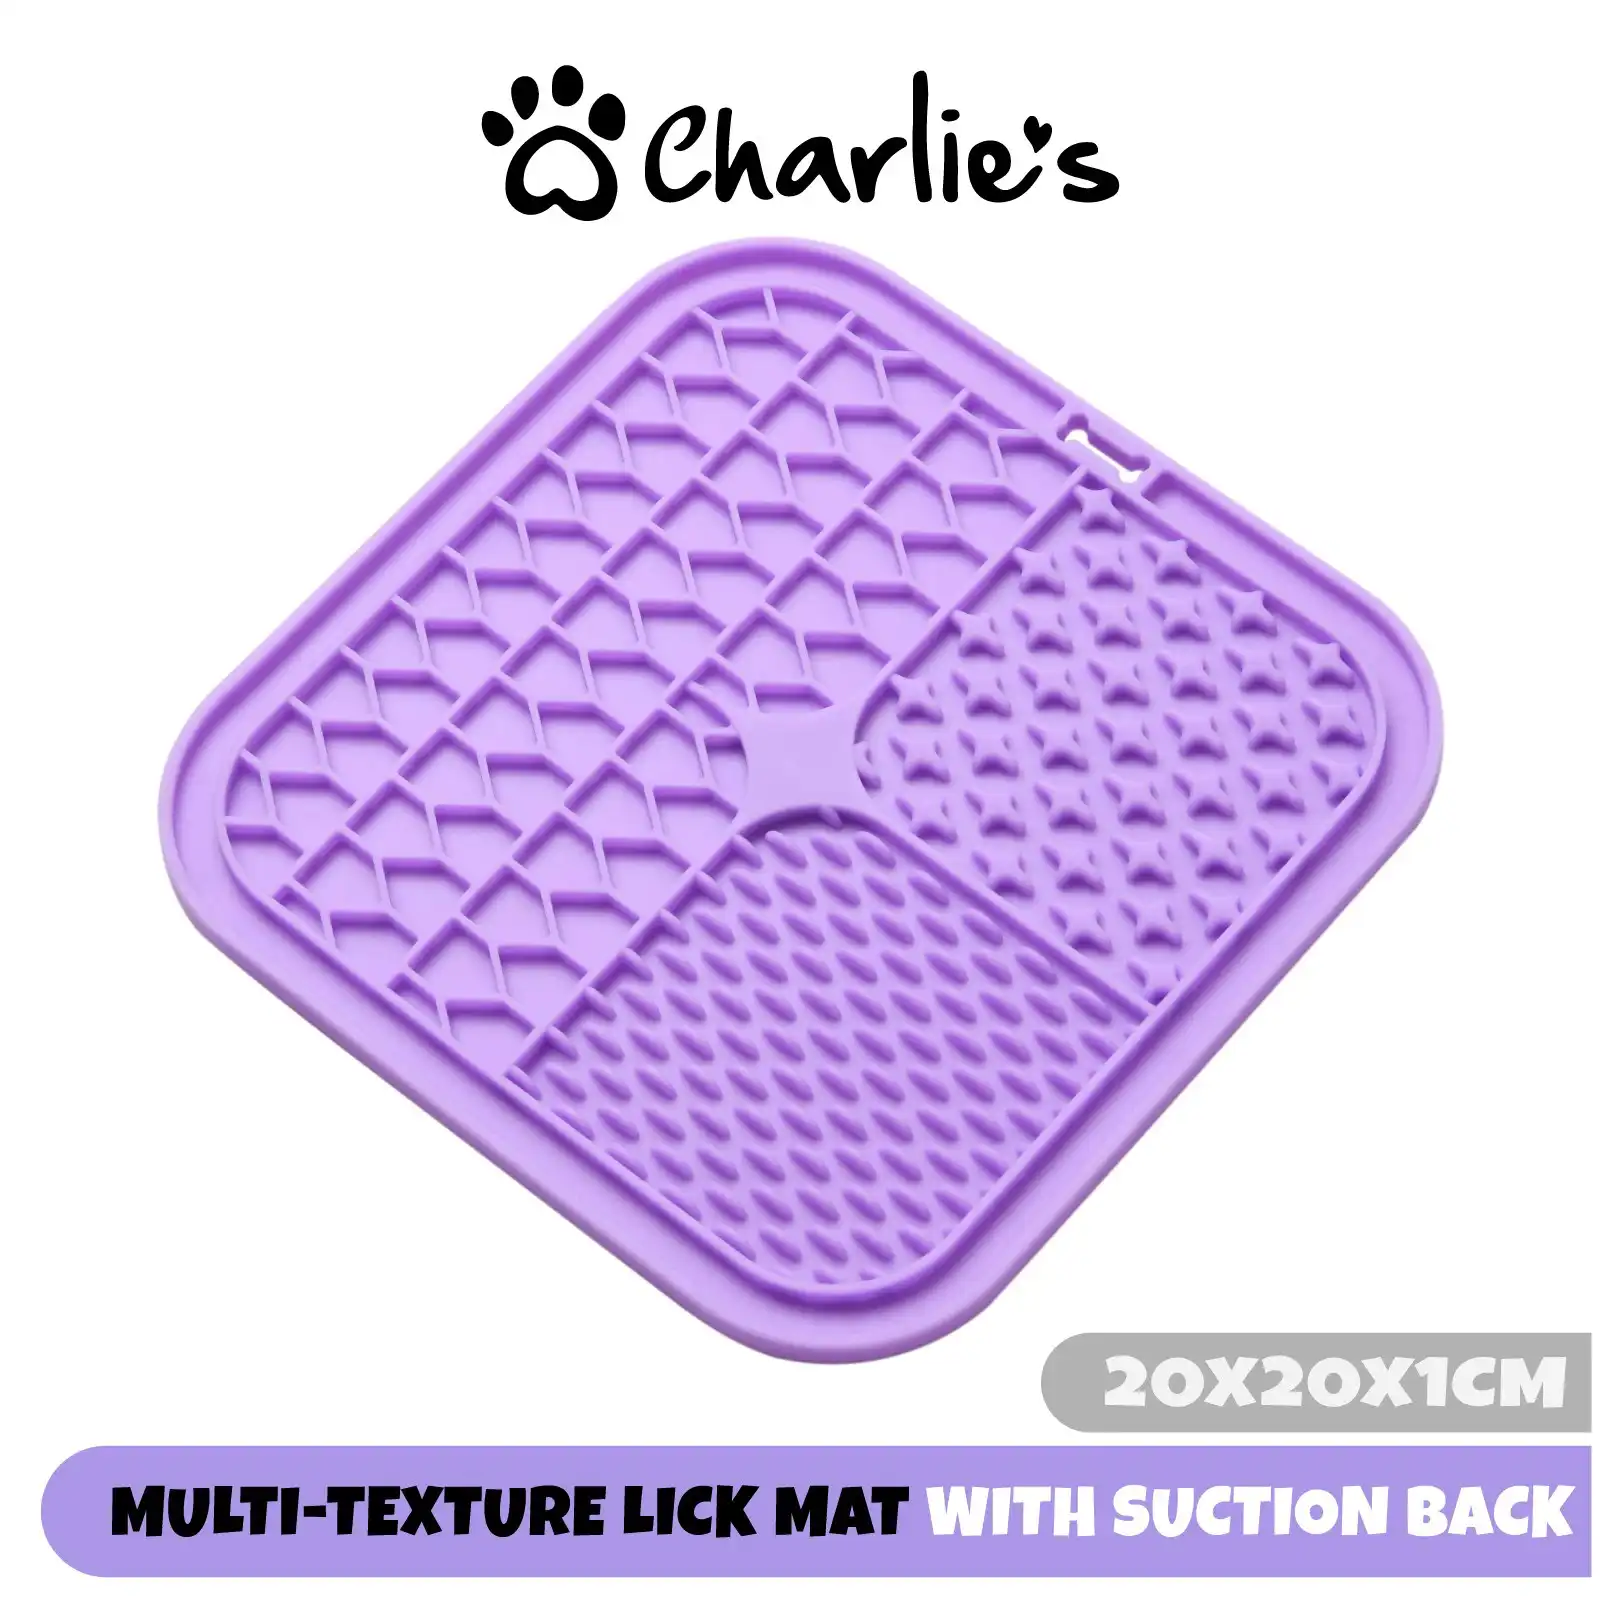 Charlie’s Shlurp Multi-Texture Lick Mat With Suction Back Purple 20x20x1cm